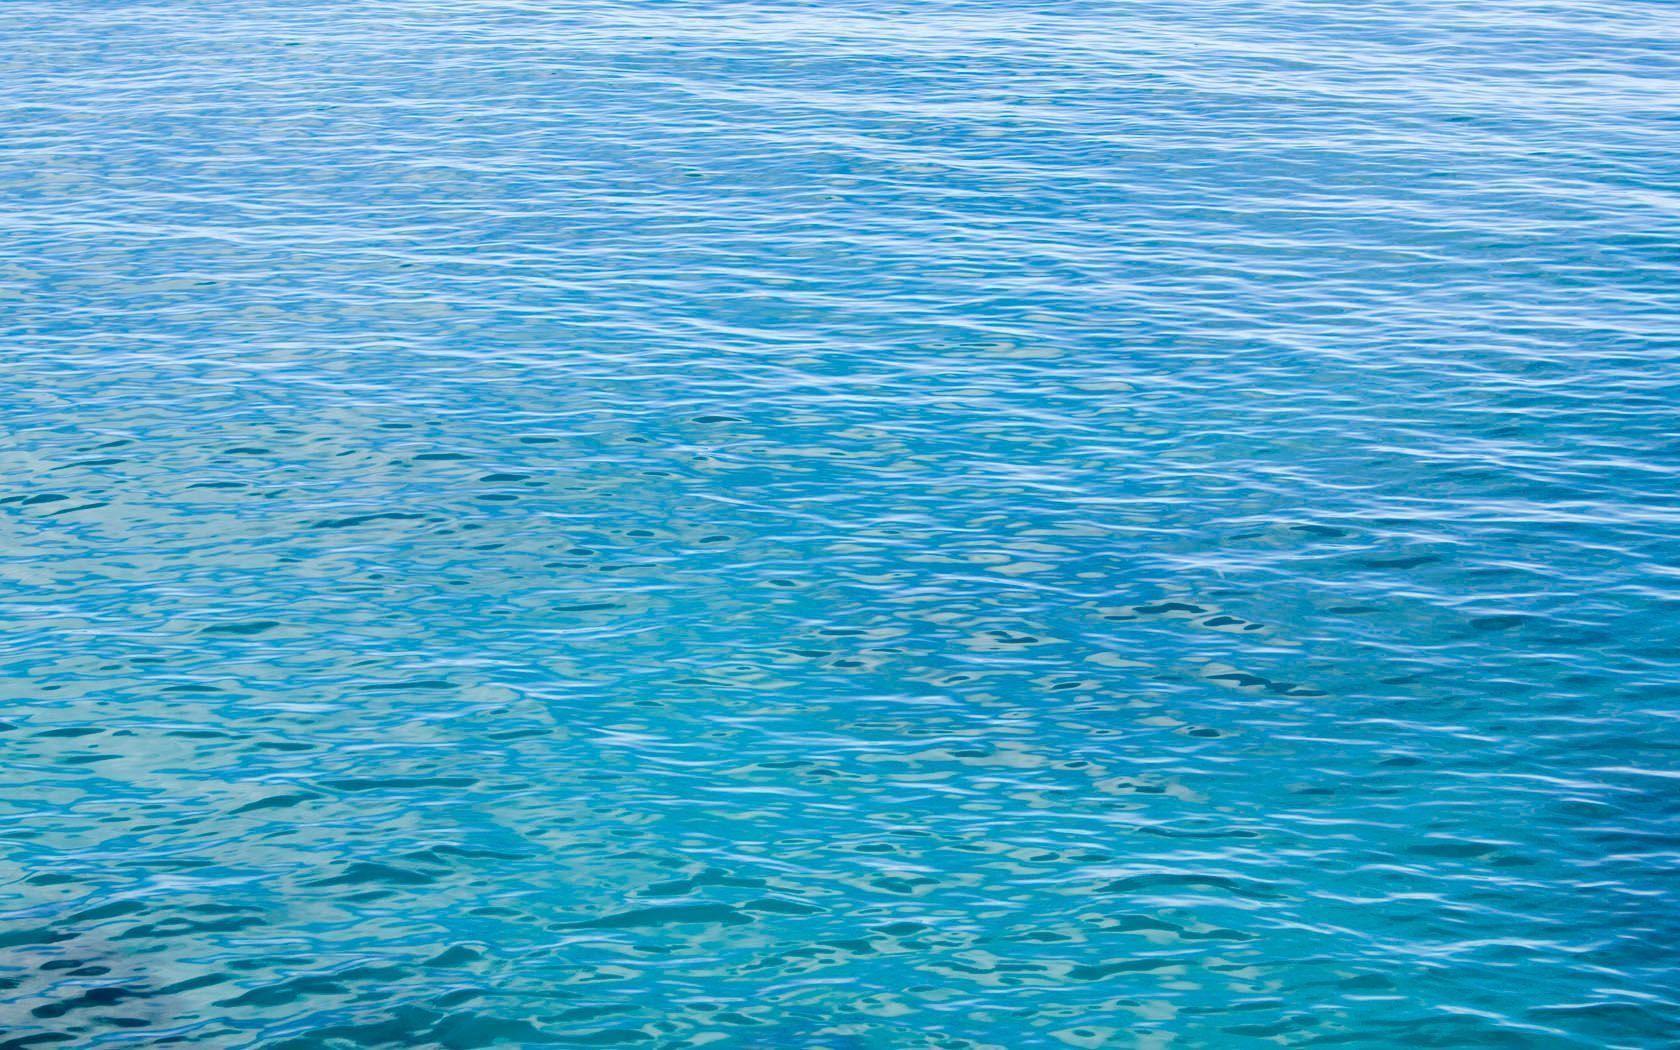 Calm Blue Water Inspiration Decorating 310588 Pool Design